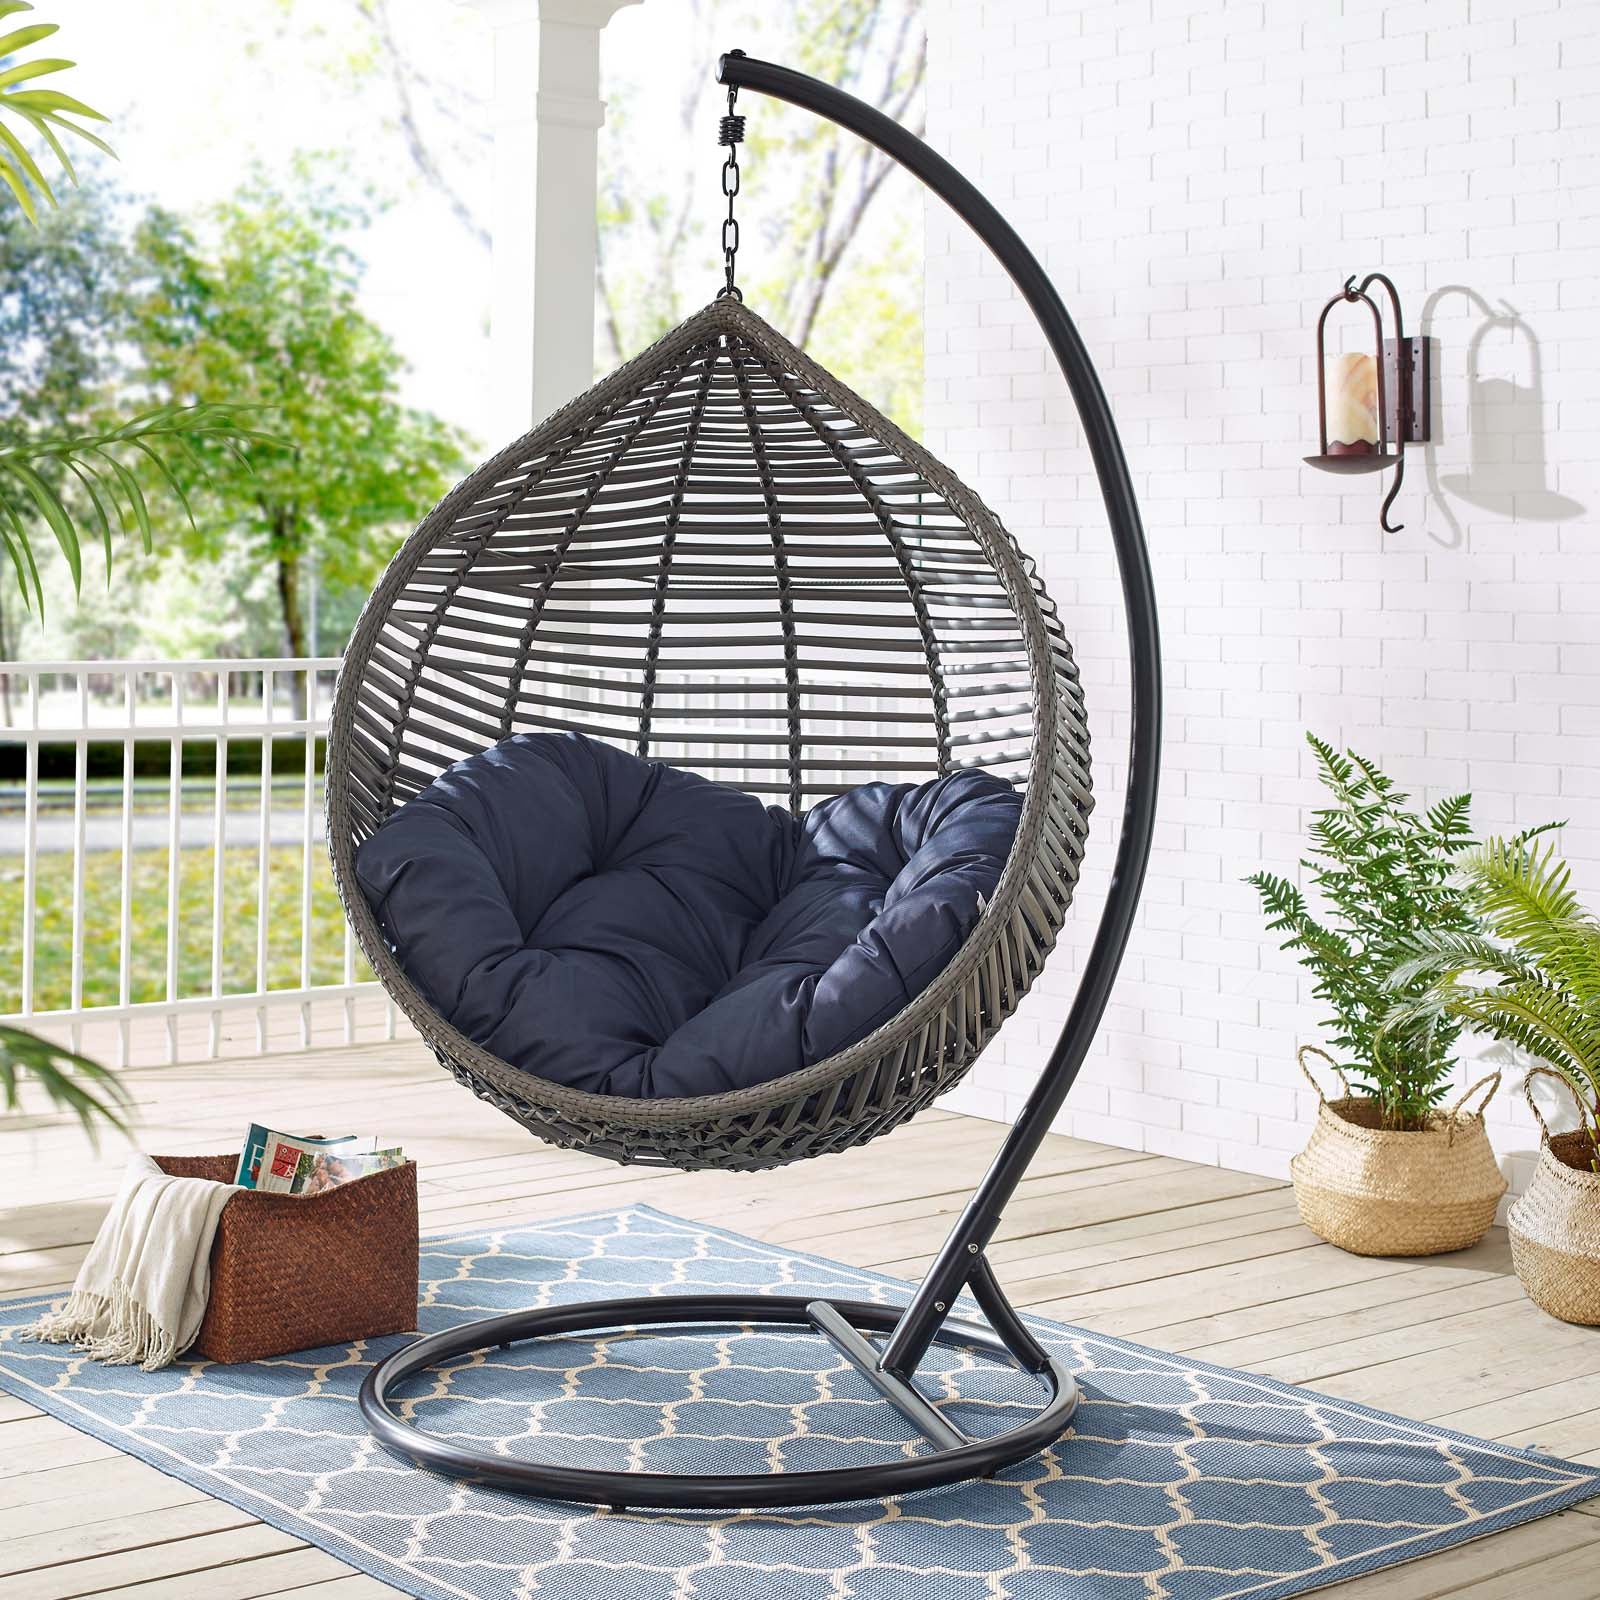 Garner Teardrop Outdoor Patio Swing Chair - East Shore Modern Home Furnishings